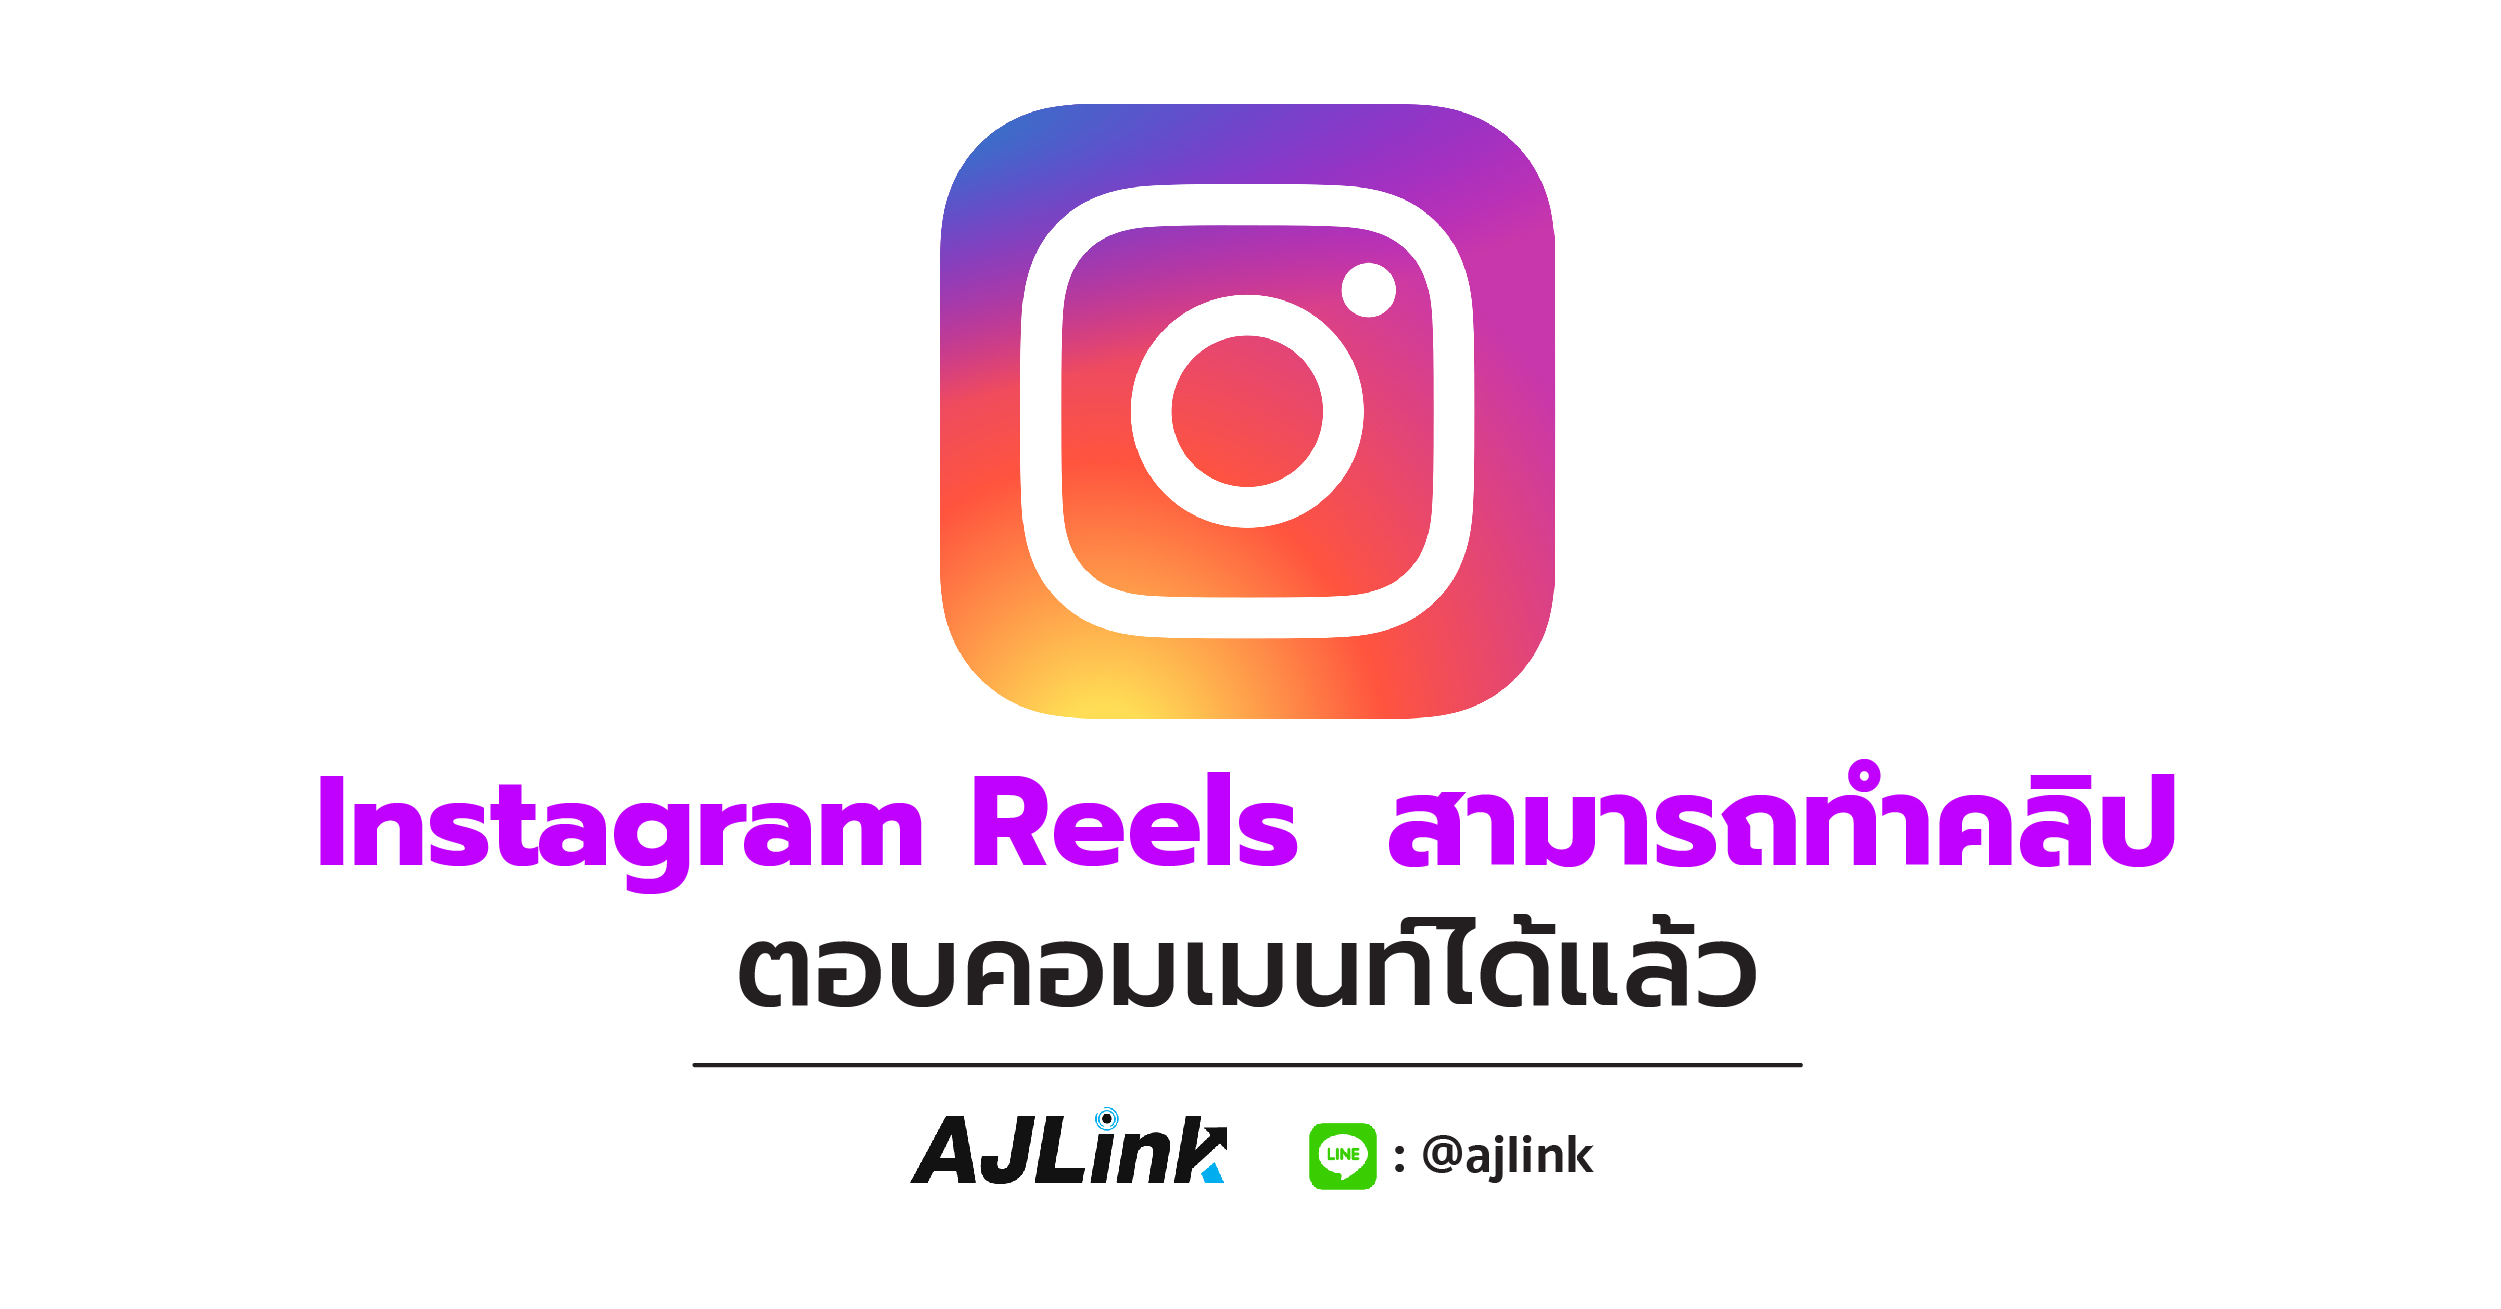 Instagram Reels สามารถทำคลิปตอบคอมเมนท์ได้แล้ว